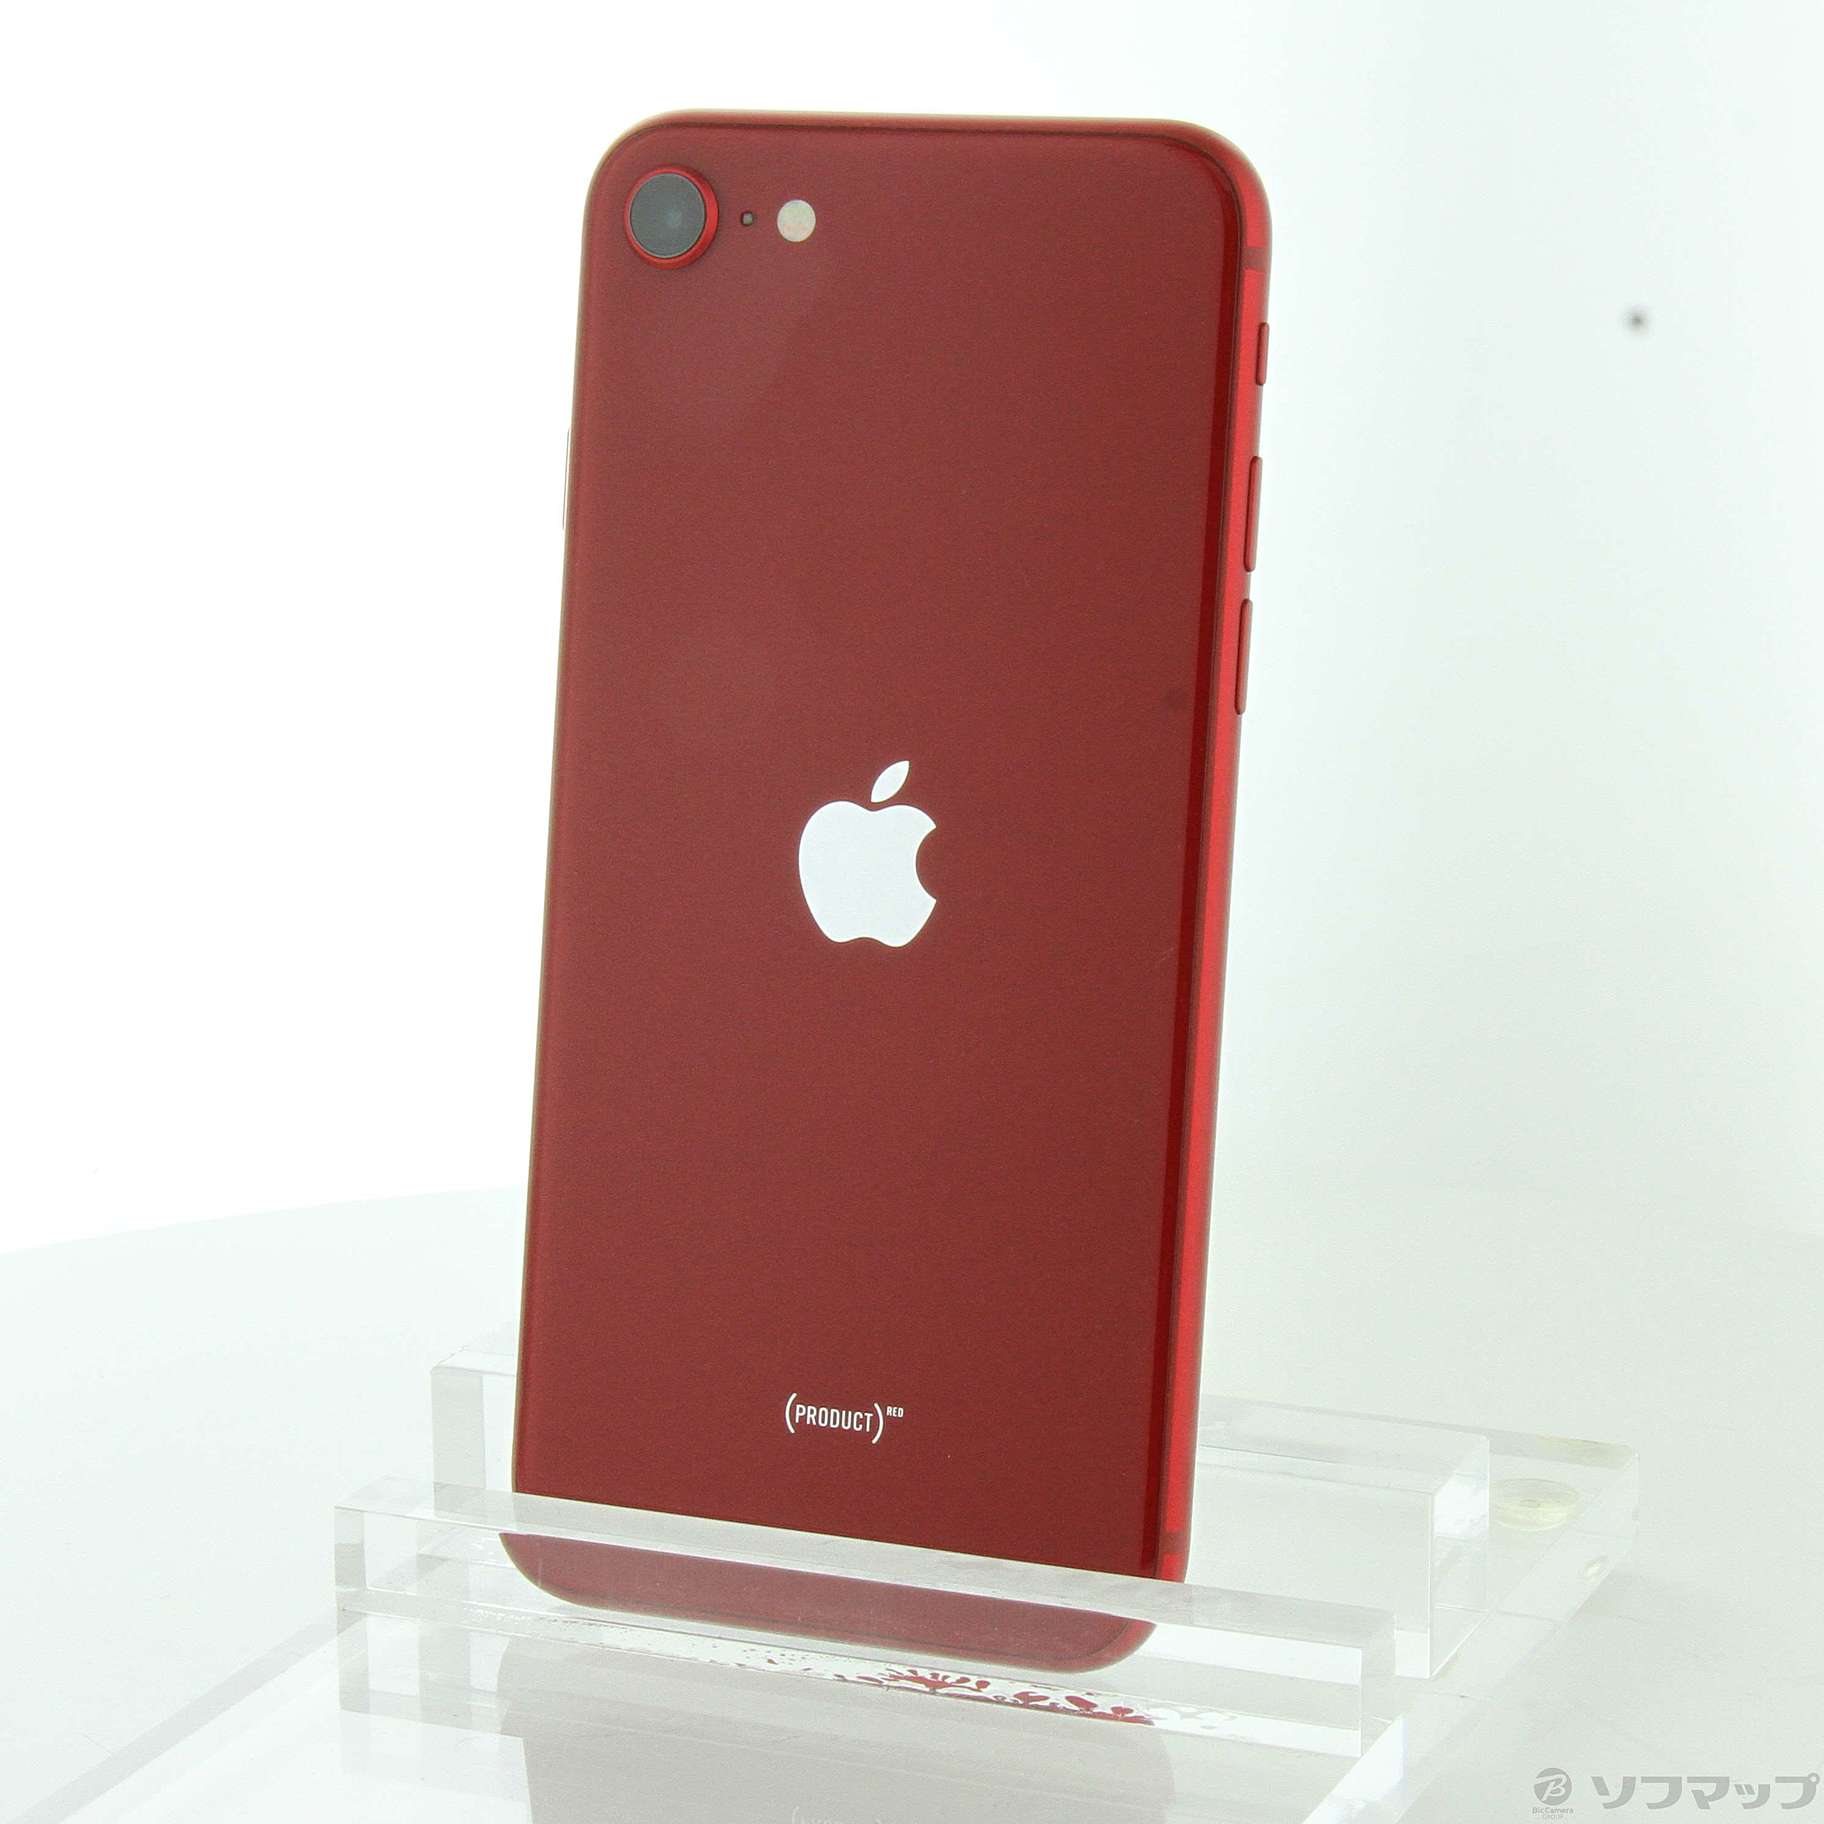 iPhone SE 第3世代 64GB RED